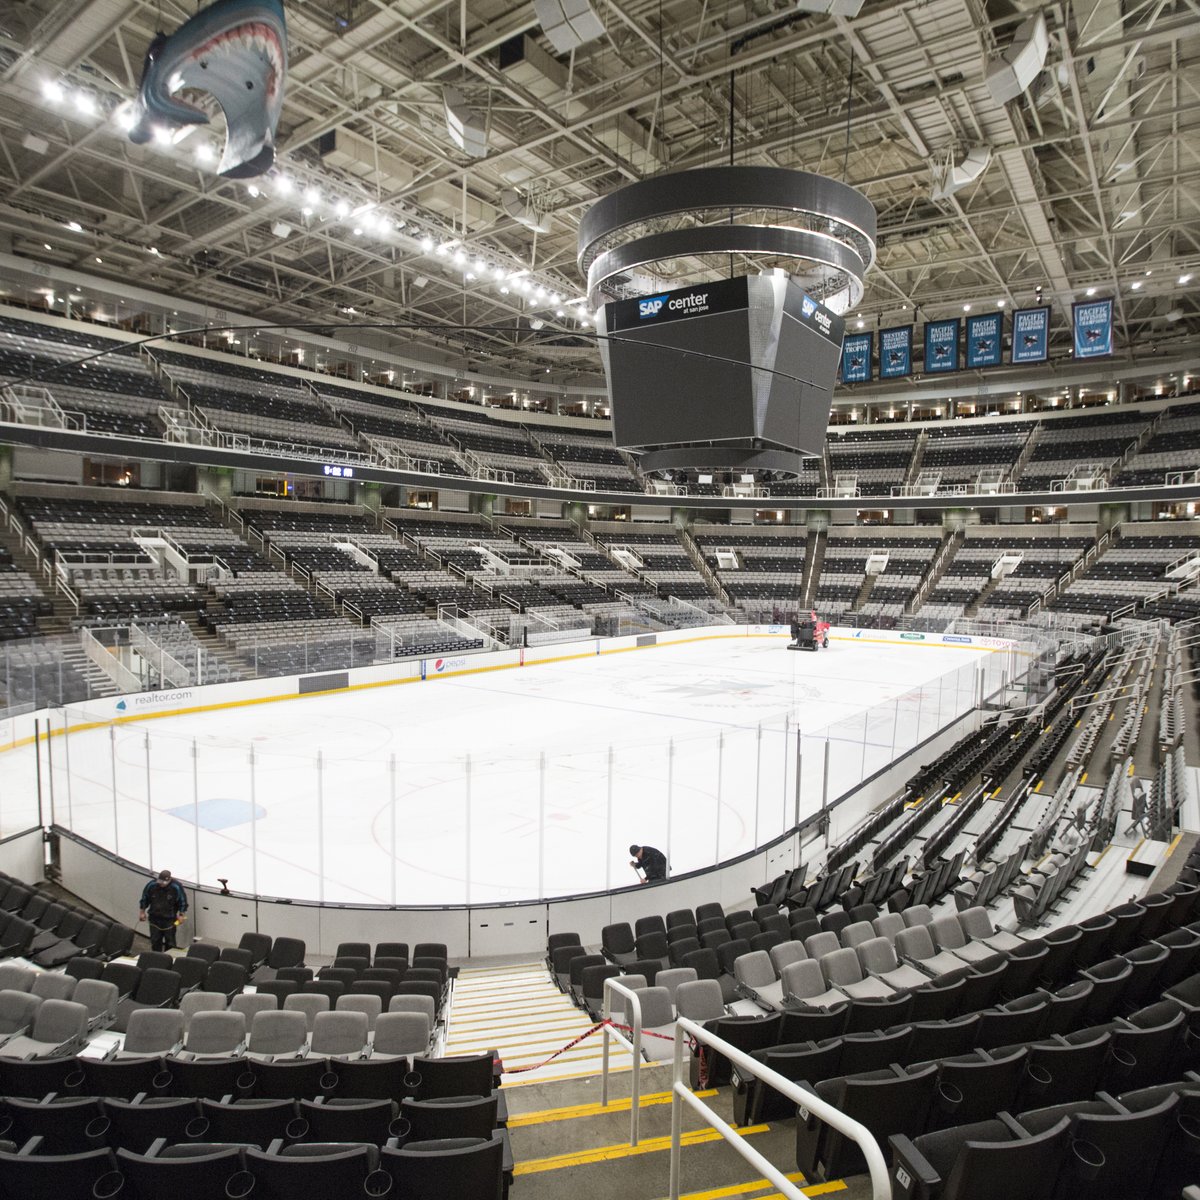 2023 San Jose Sharks Ice Hockey Game Ticket at SAP Center